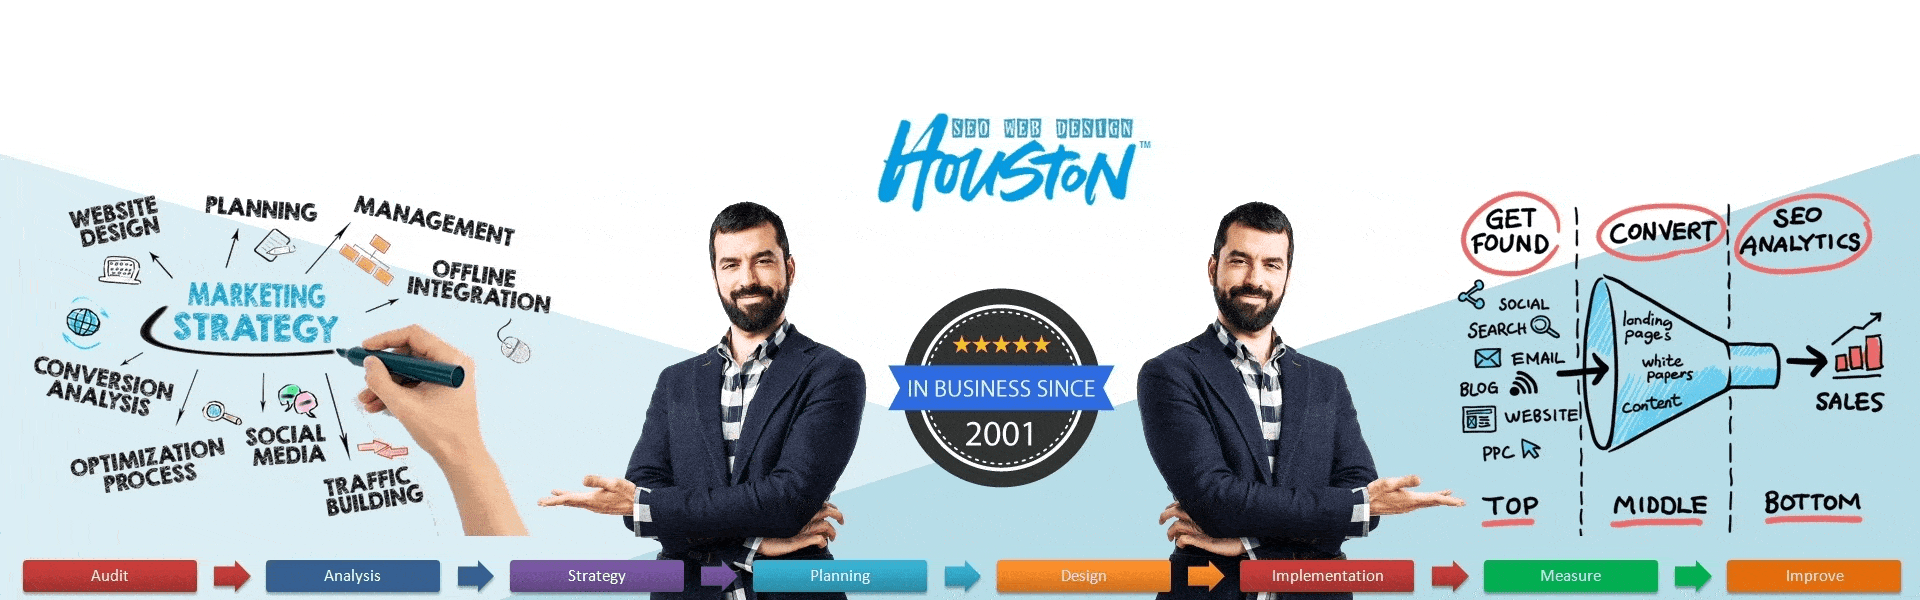 Houston Website Designer and SEO Expert since 2001- SEOWebDesignHouston.com